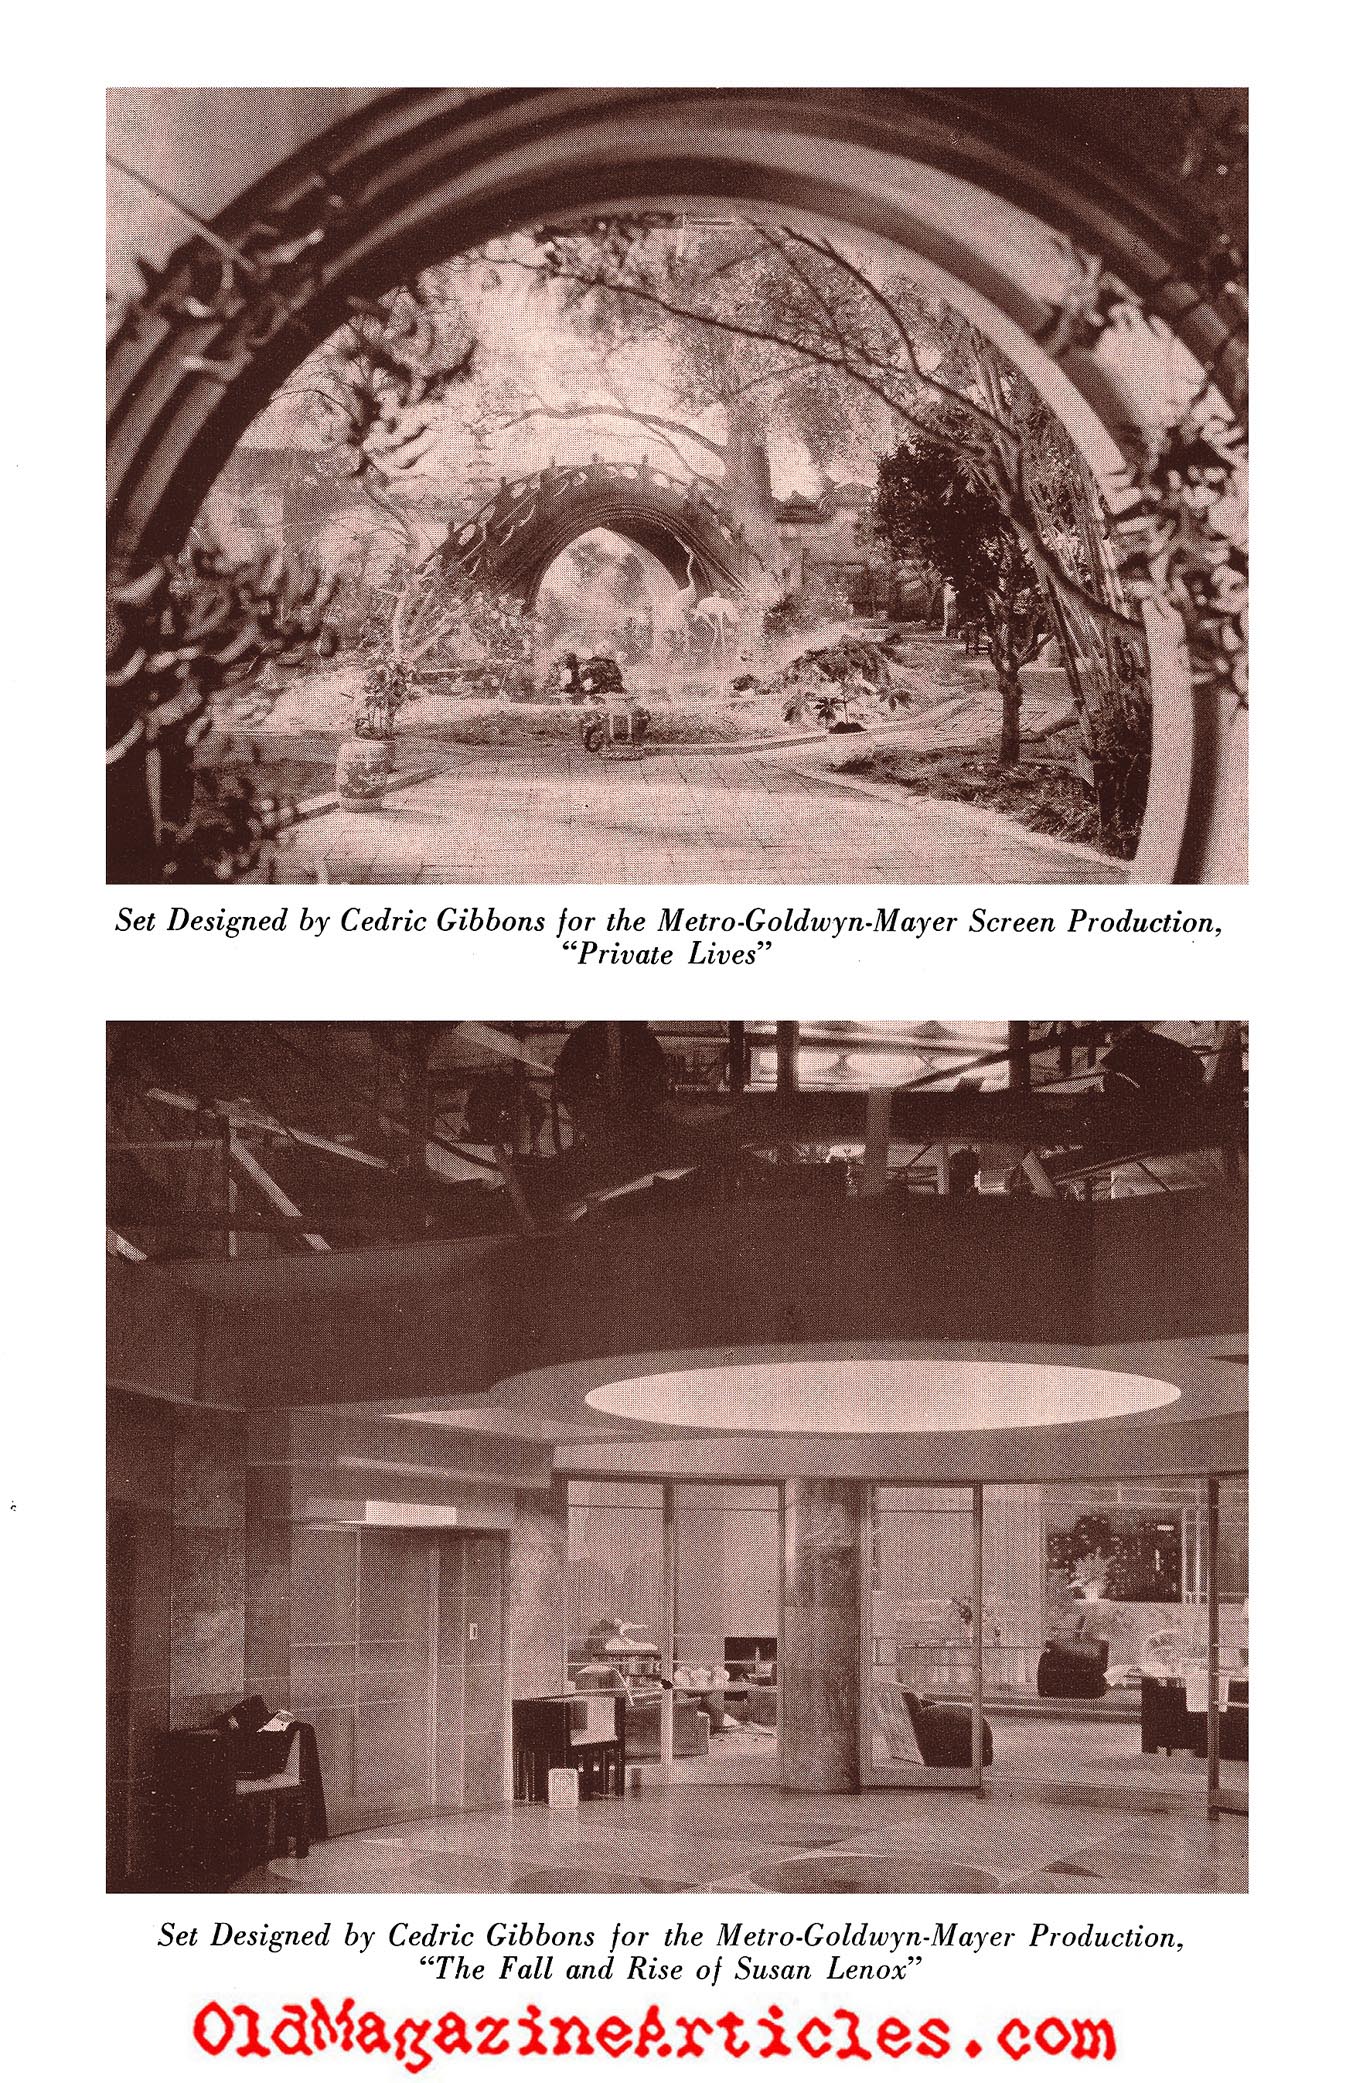 Cedric Gibbons: Production Designer (Creative Art Magazine, 1932)